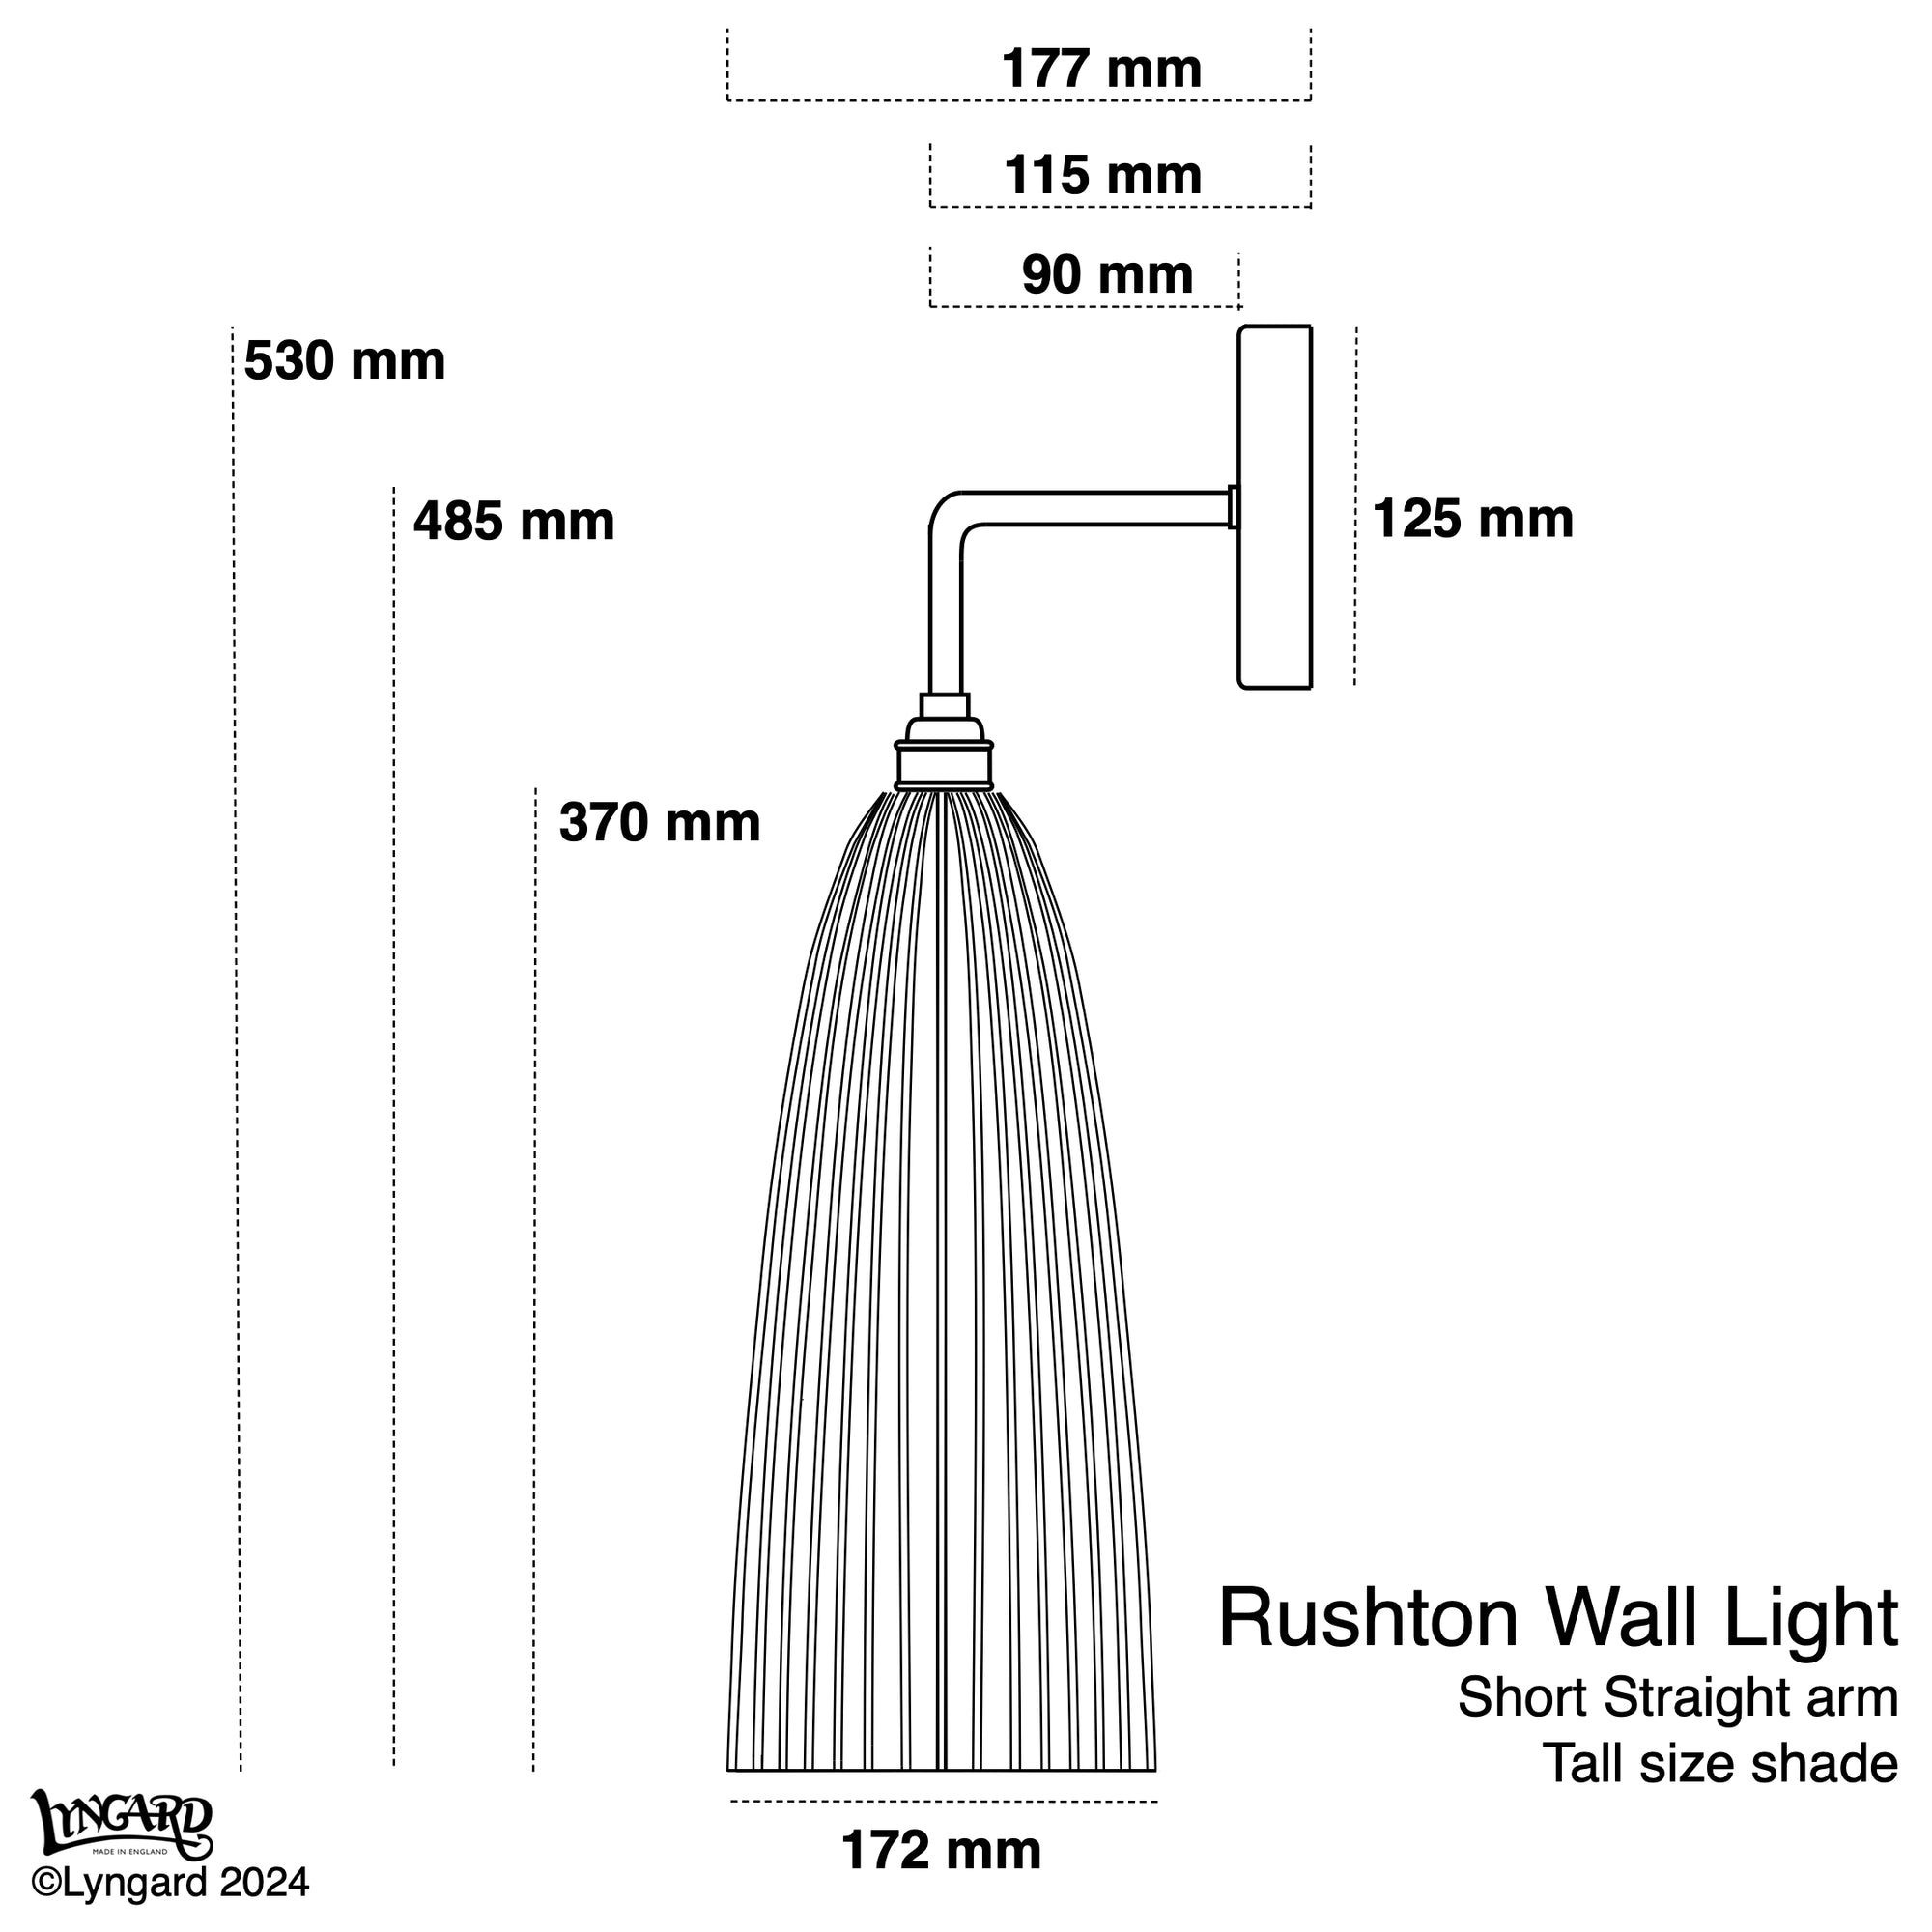 Rushton Tall Straight Arm Wall Light